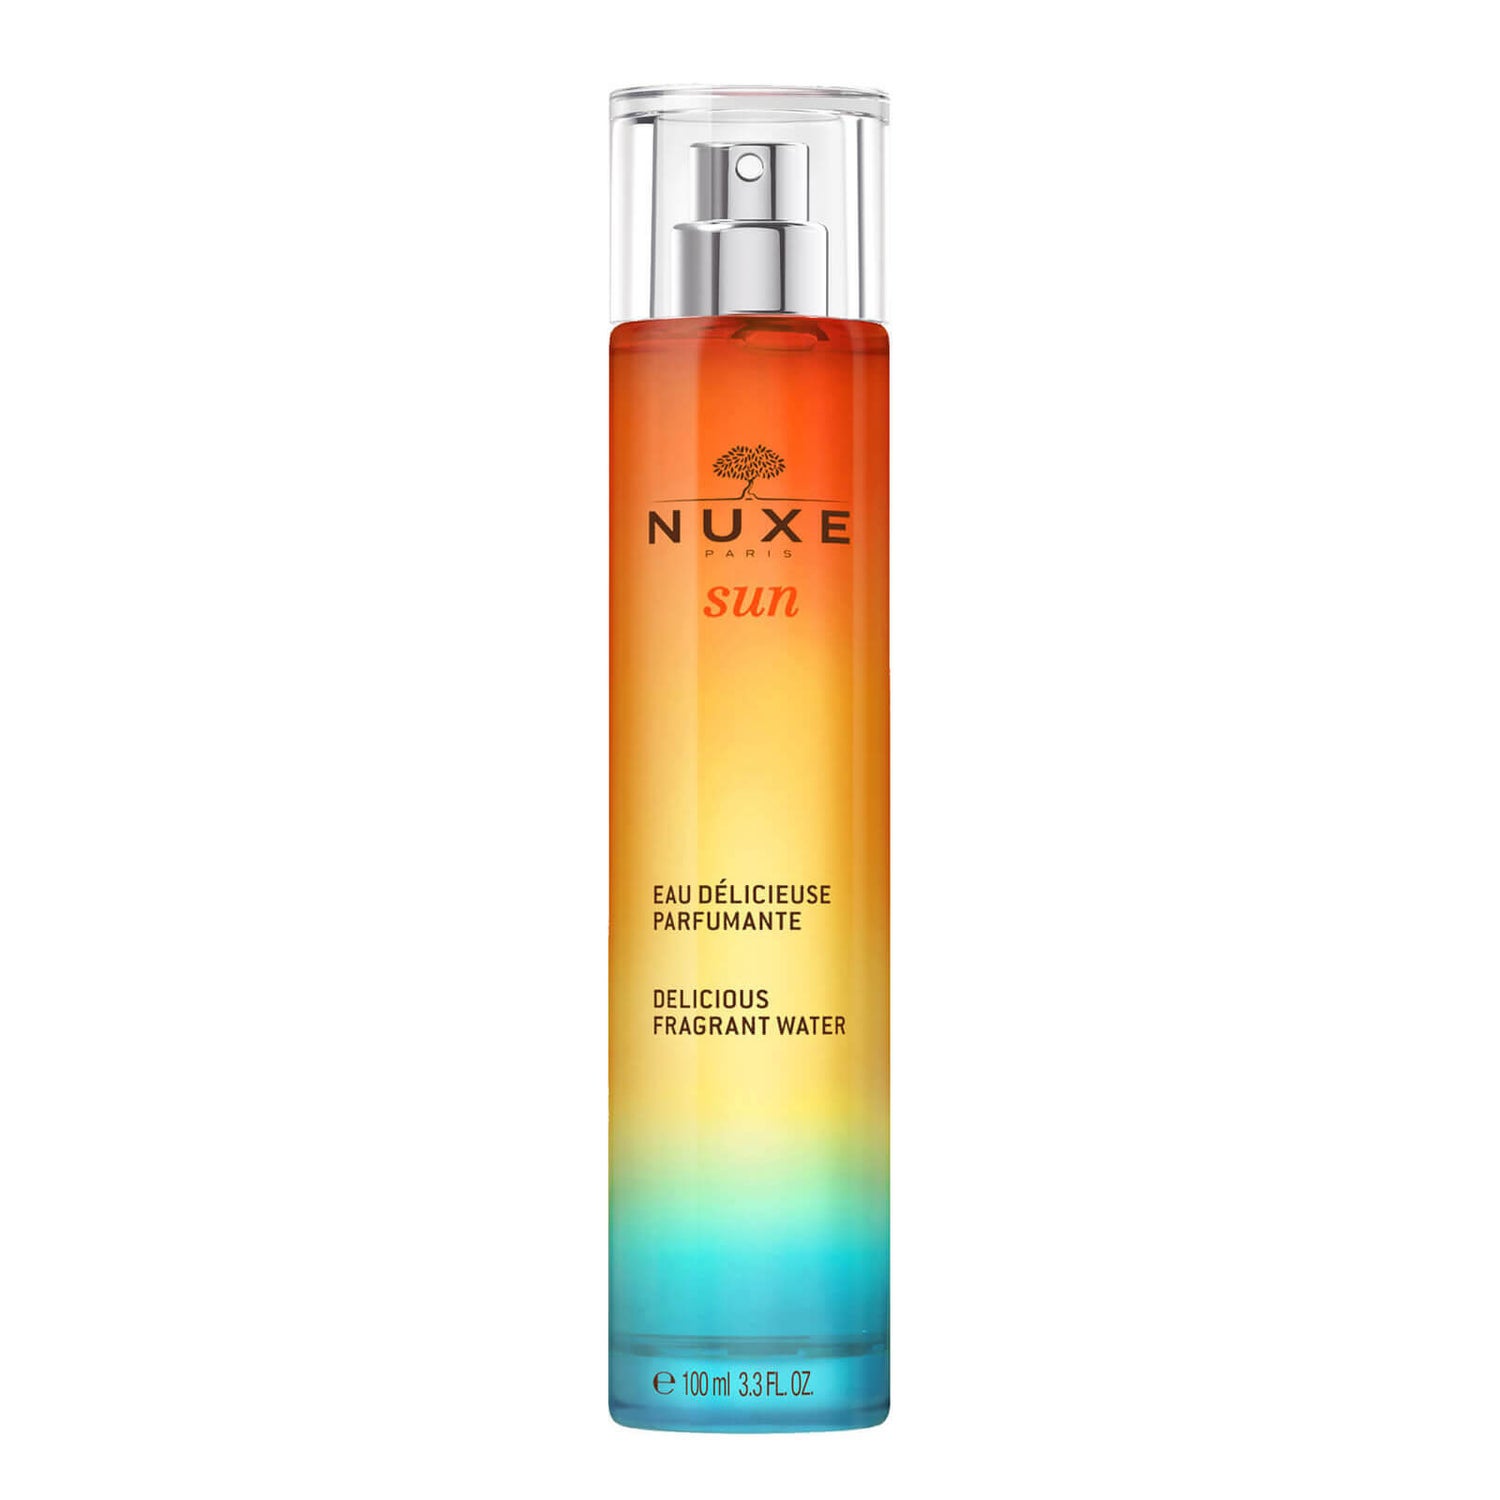 Delicious Fragrant Water, NUXE Sun 100ml